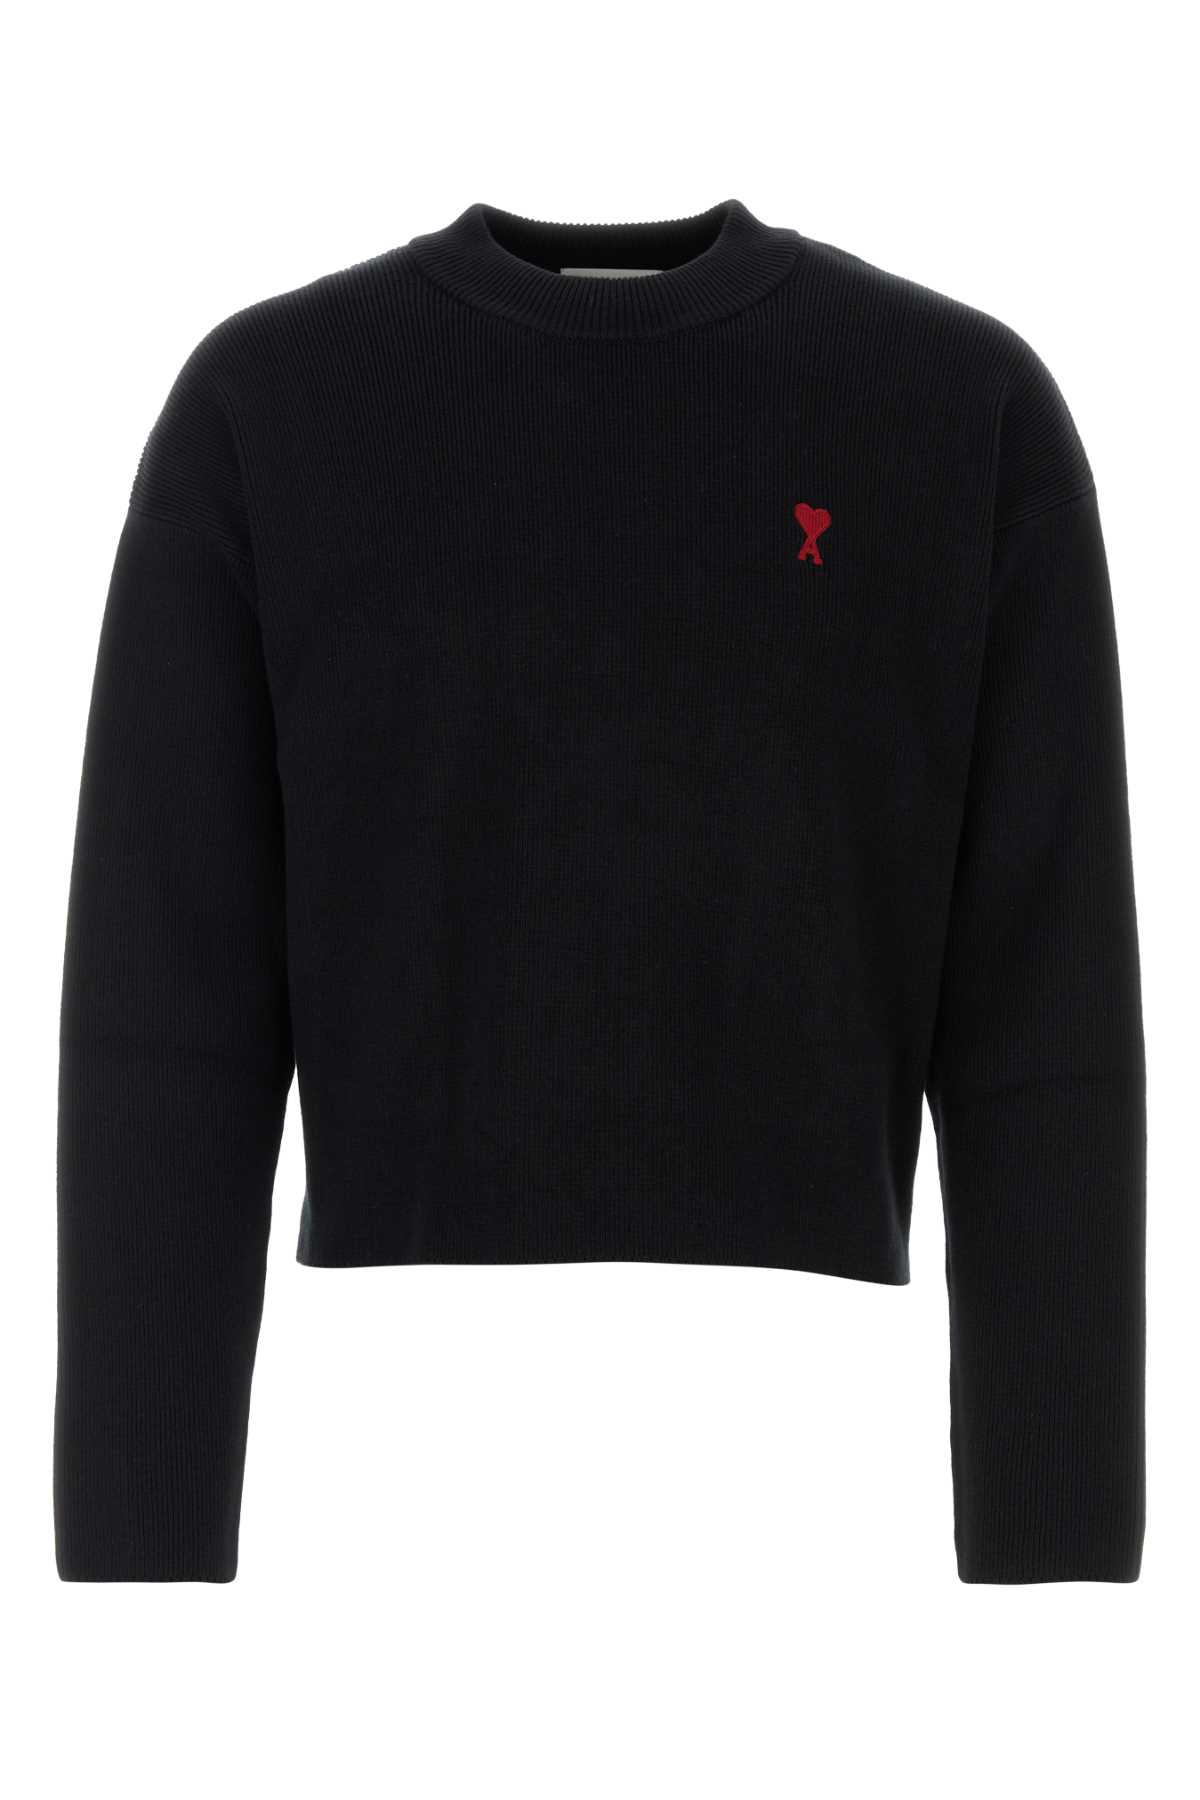 Shop Ami Alexandre Mattiussi Black Stretch Cotton Blend Sweater